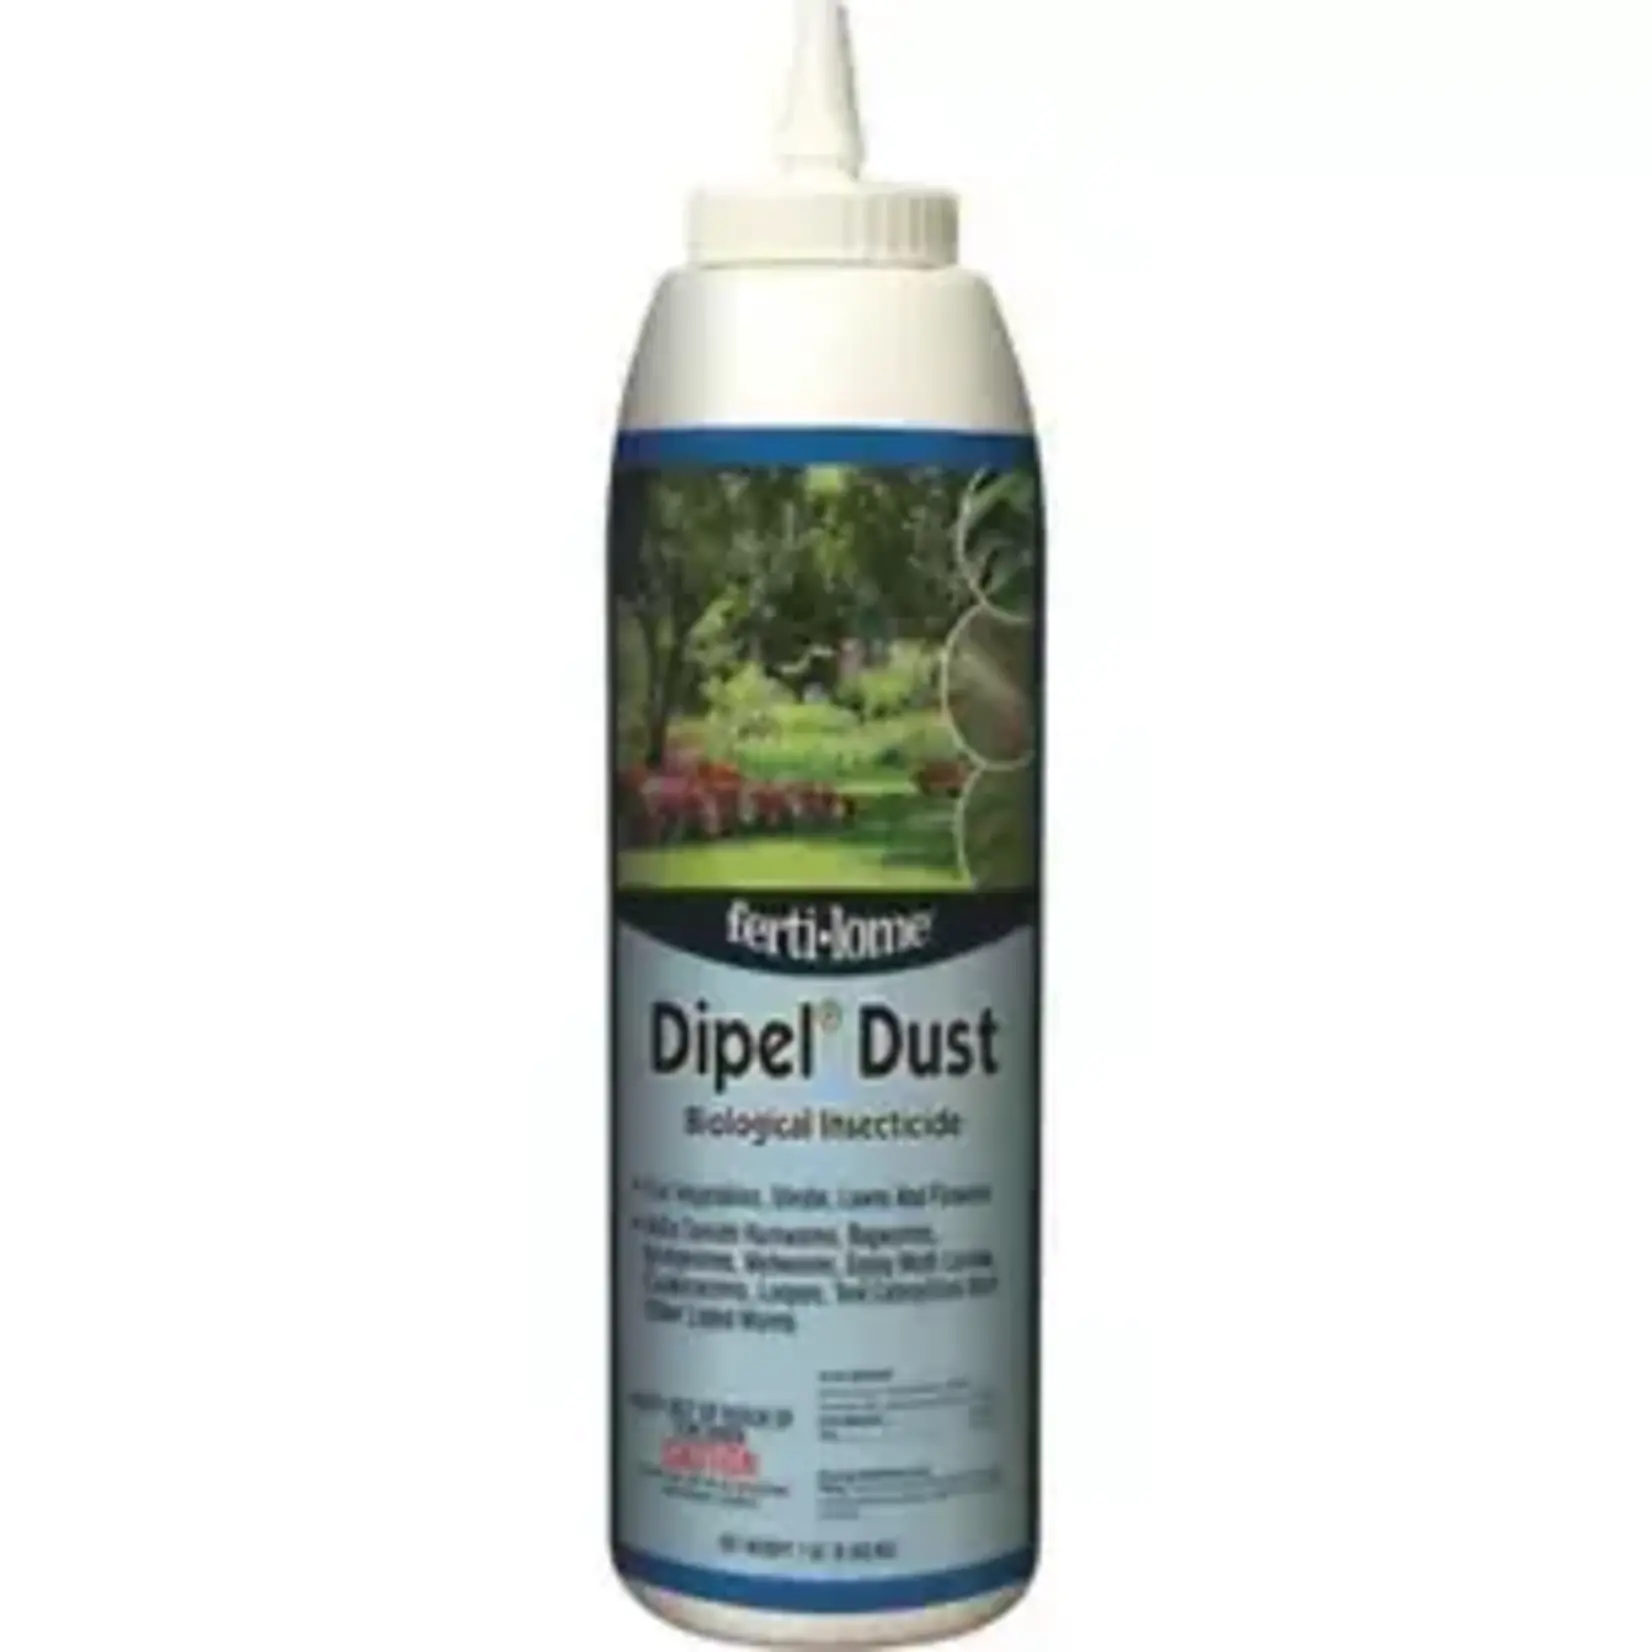 Ferti-lome Dipel Dust Biological Insecticide 1lb